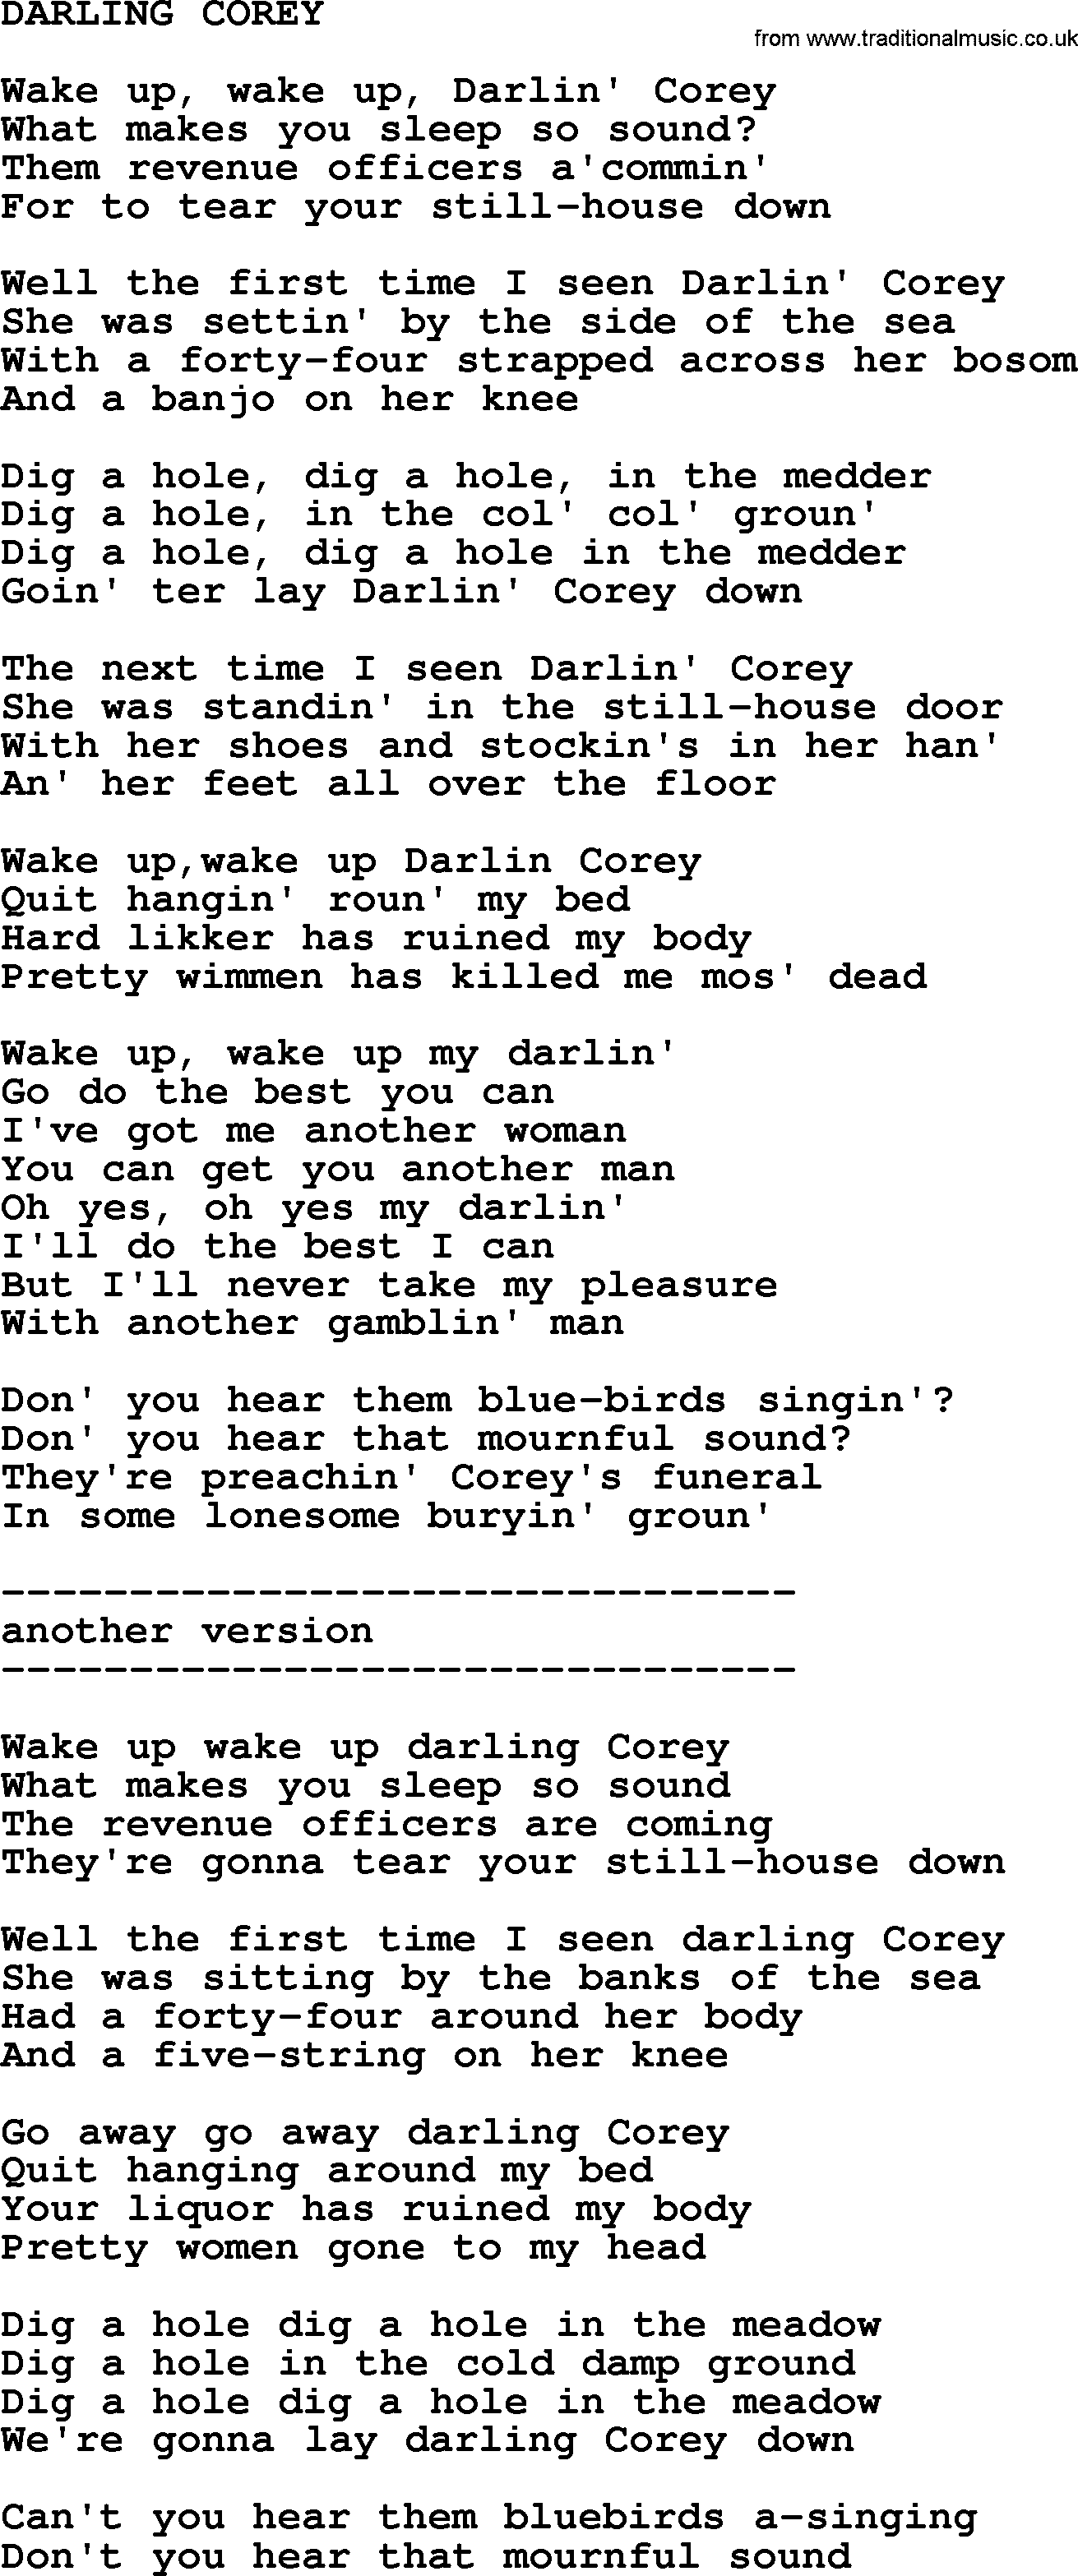 The Byrds song Darling Corey, lyrics